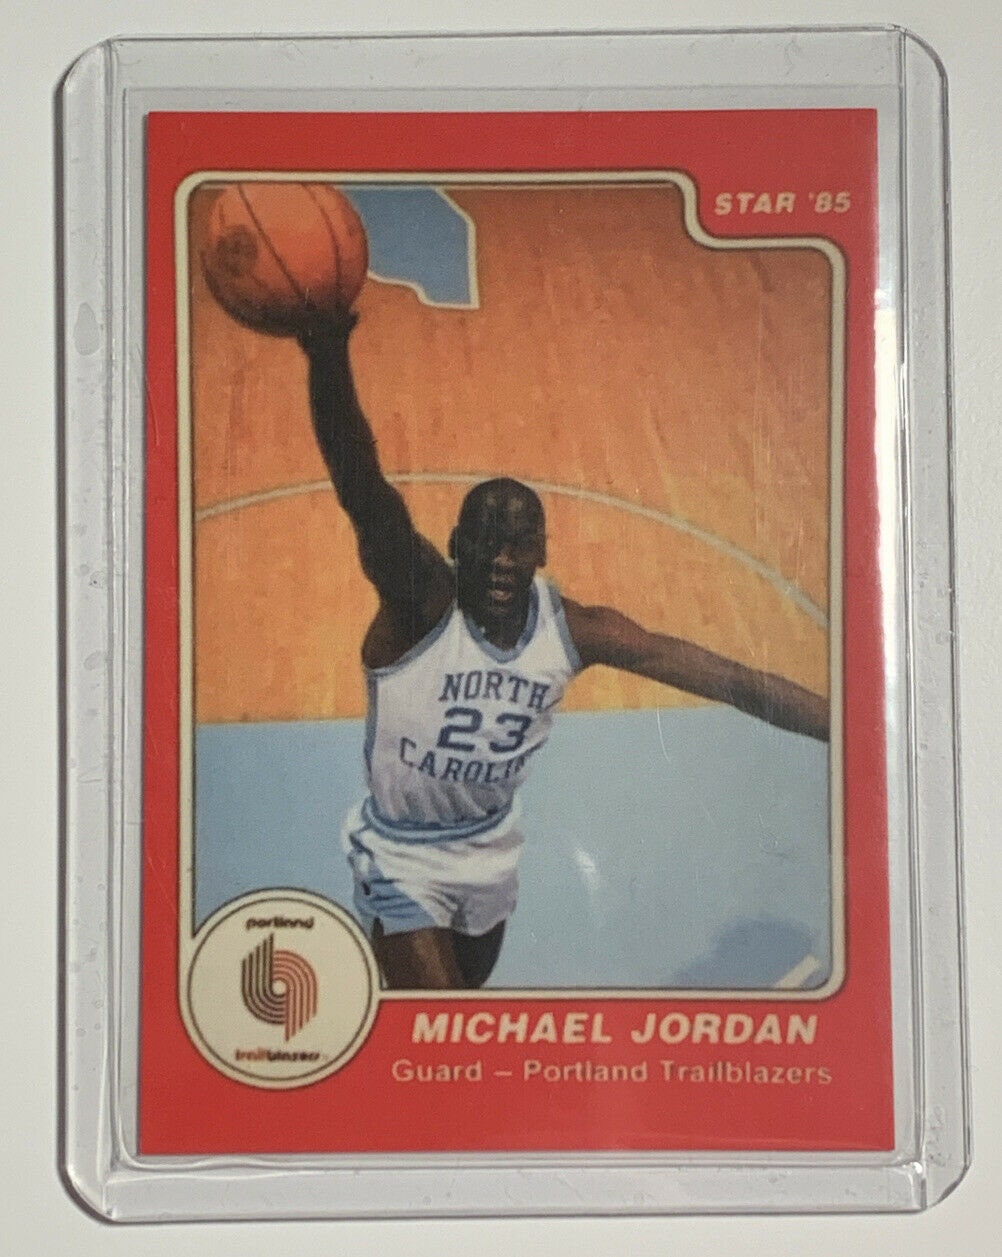 Rare Michael Jordan 1985 Star Company Error Rookie Promo Card - Etsy